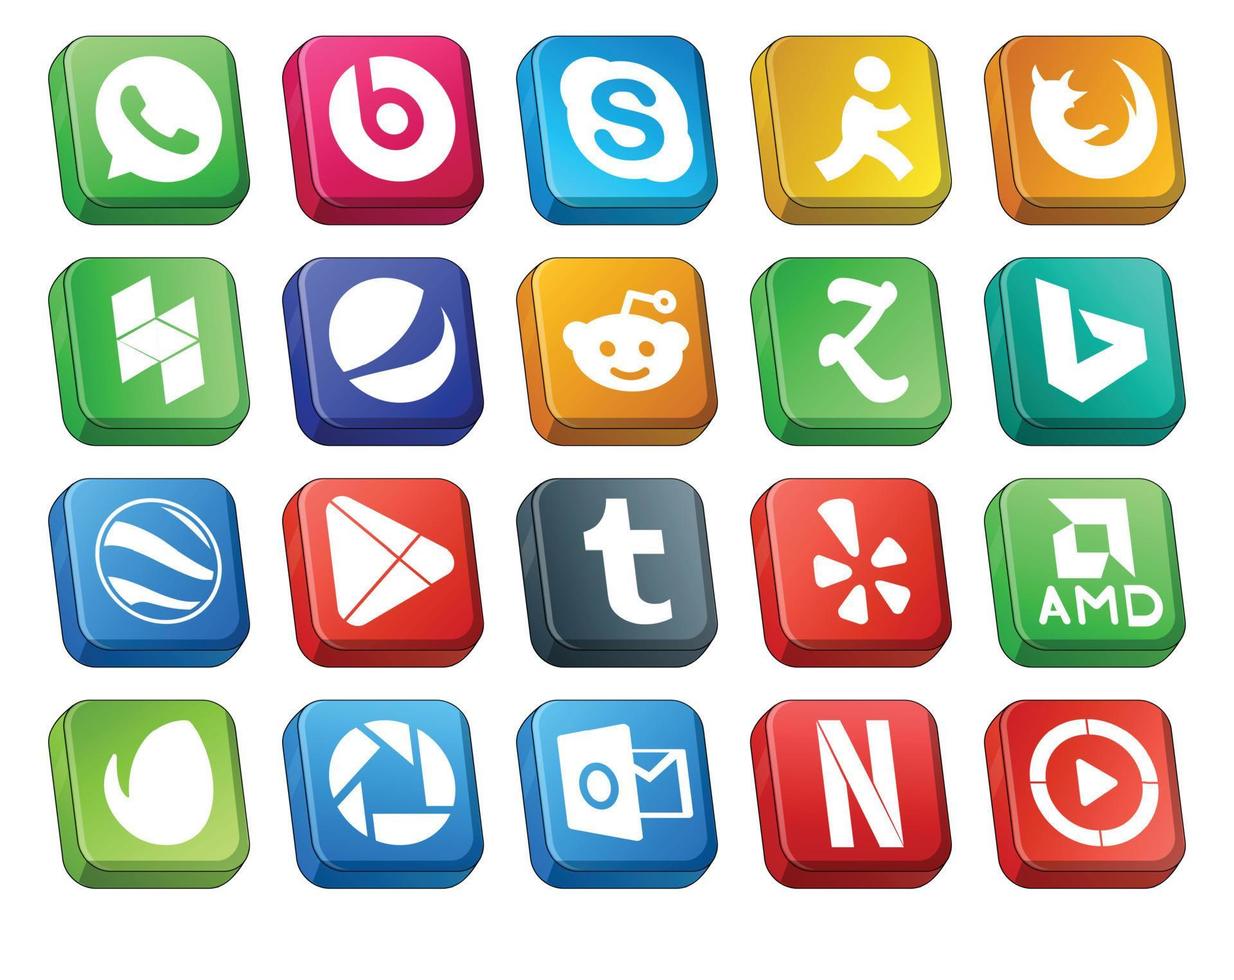 20 Social Media Icon Pack Including amd tumblr pepsi apps google earth vector